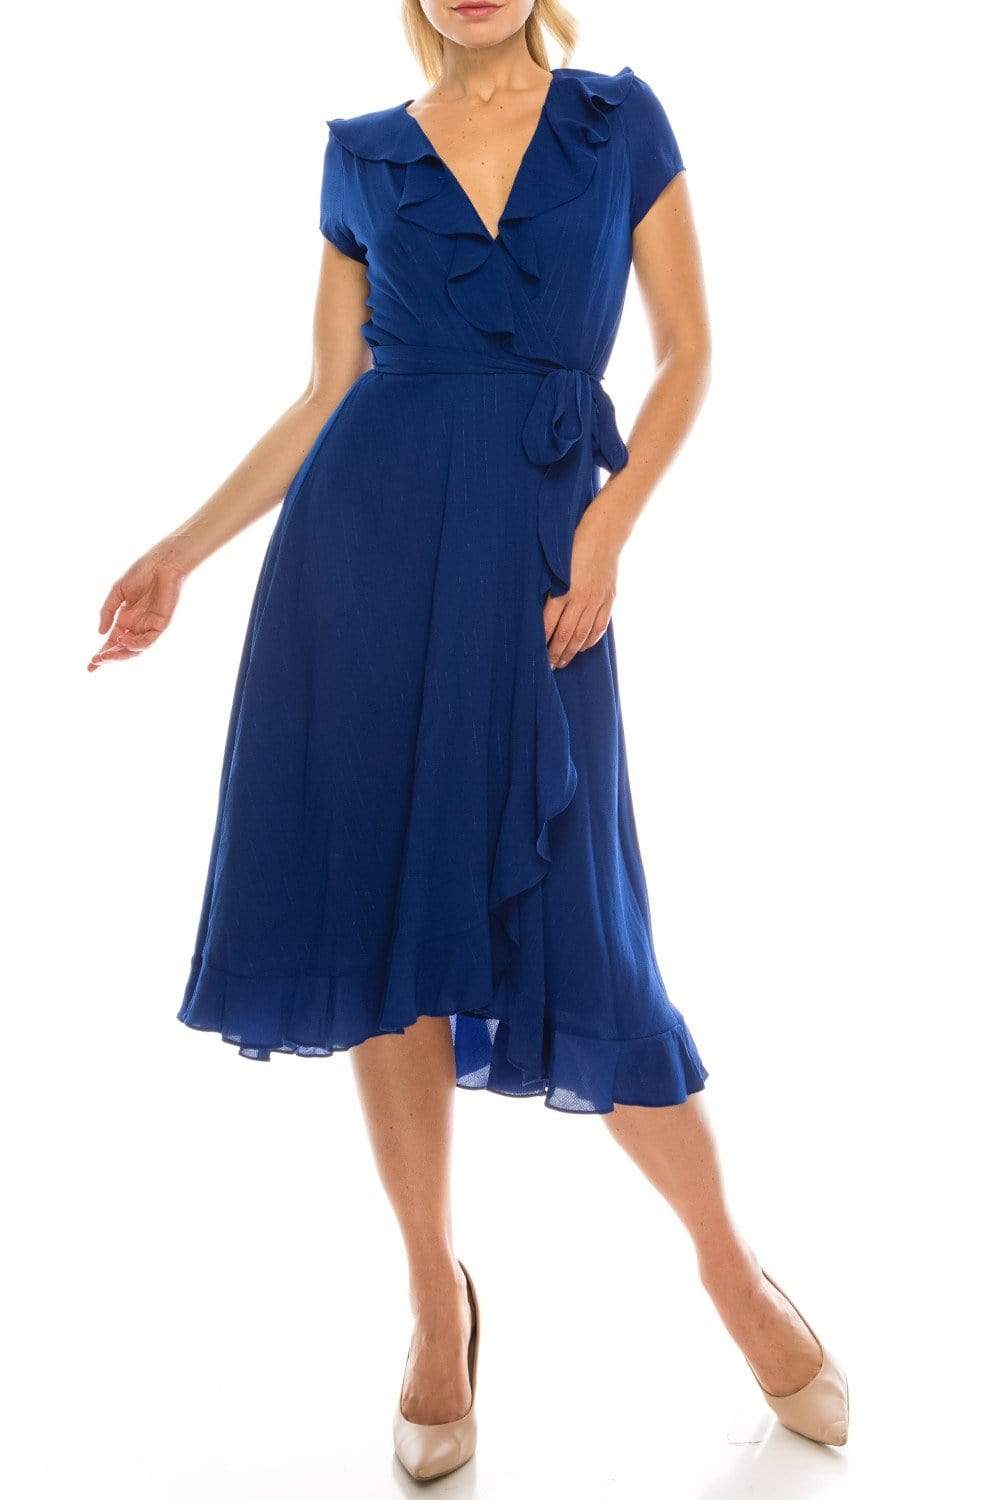 Image of Gabby Skye - 56839MG Short Sleeve Metallic Pinstriped Faux Wrap Dress